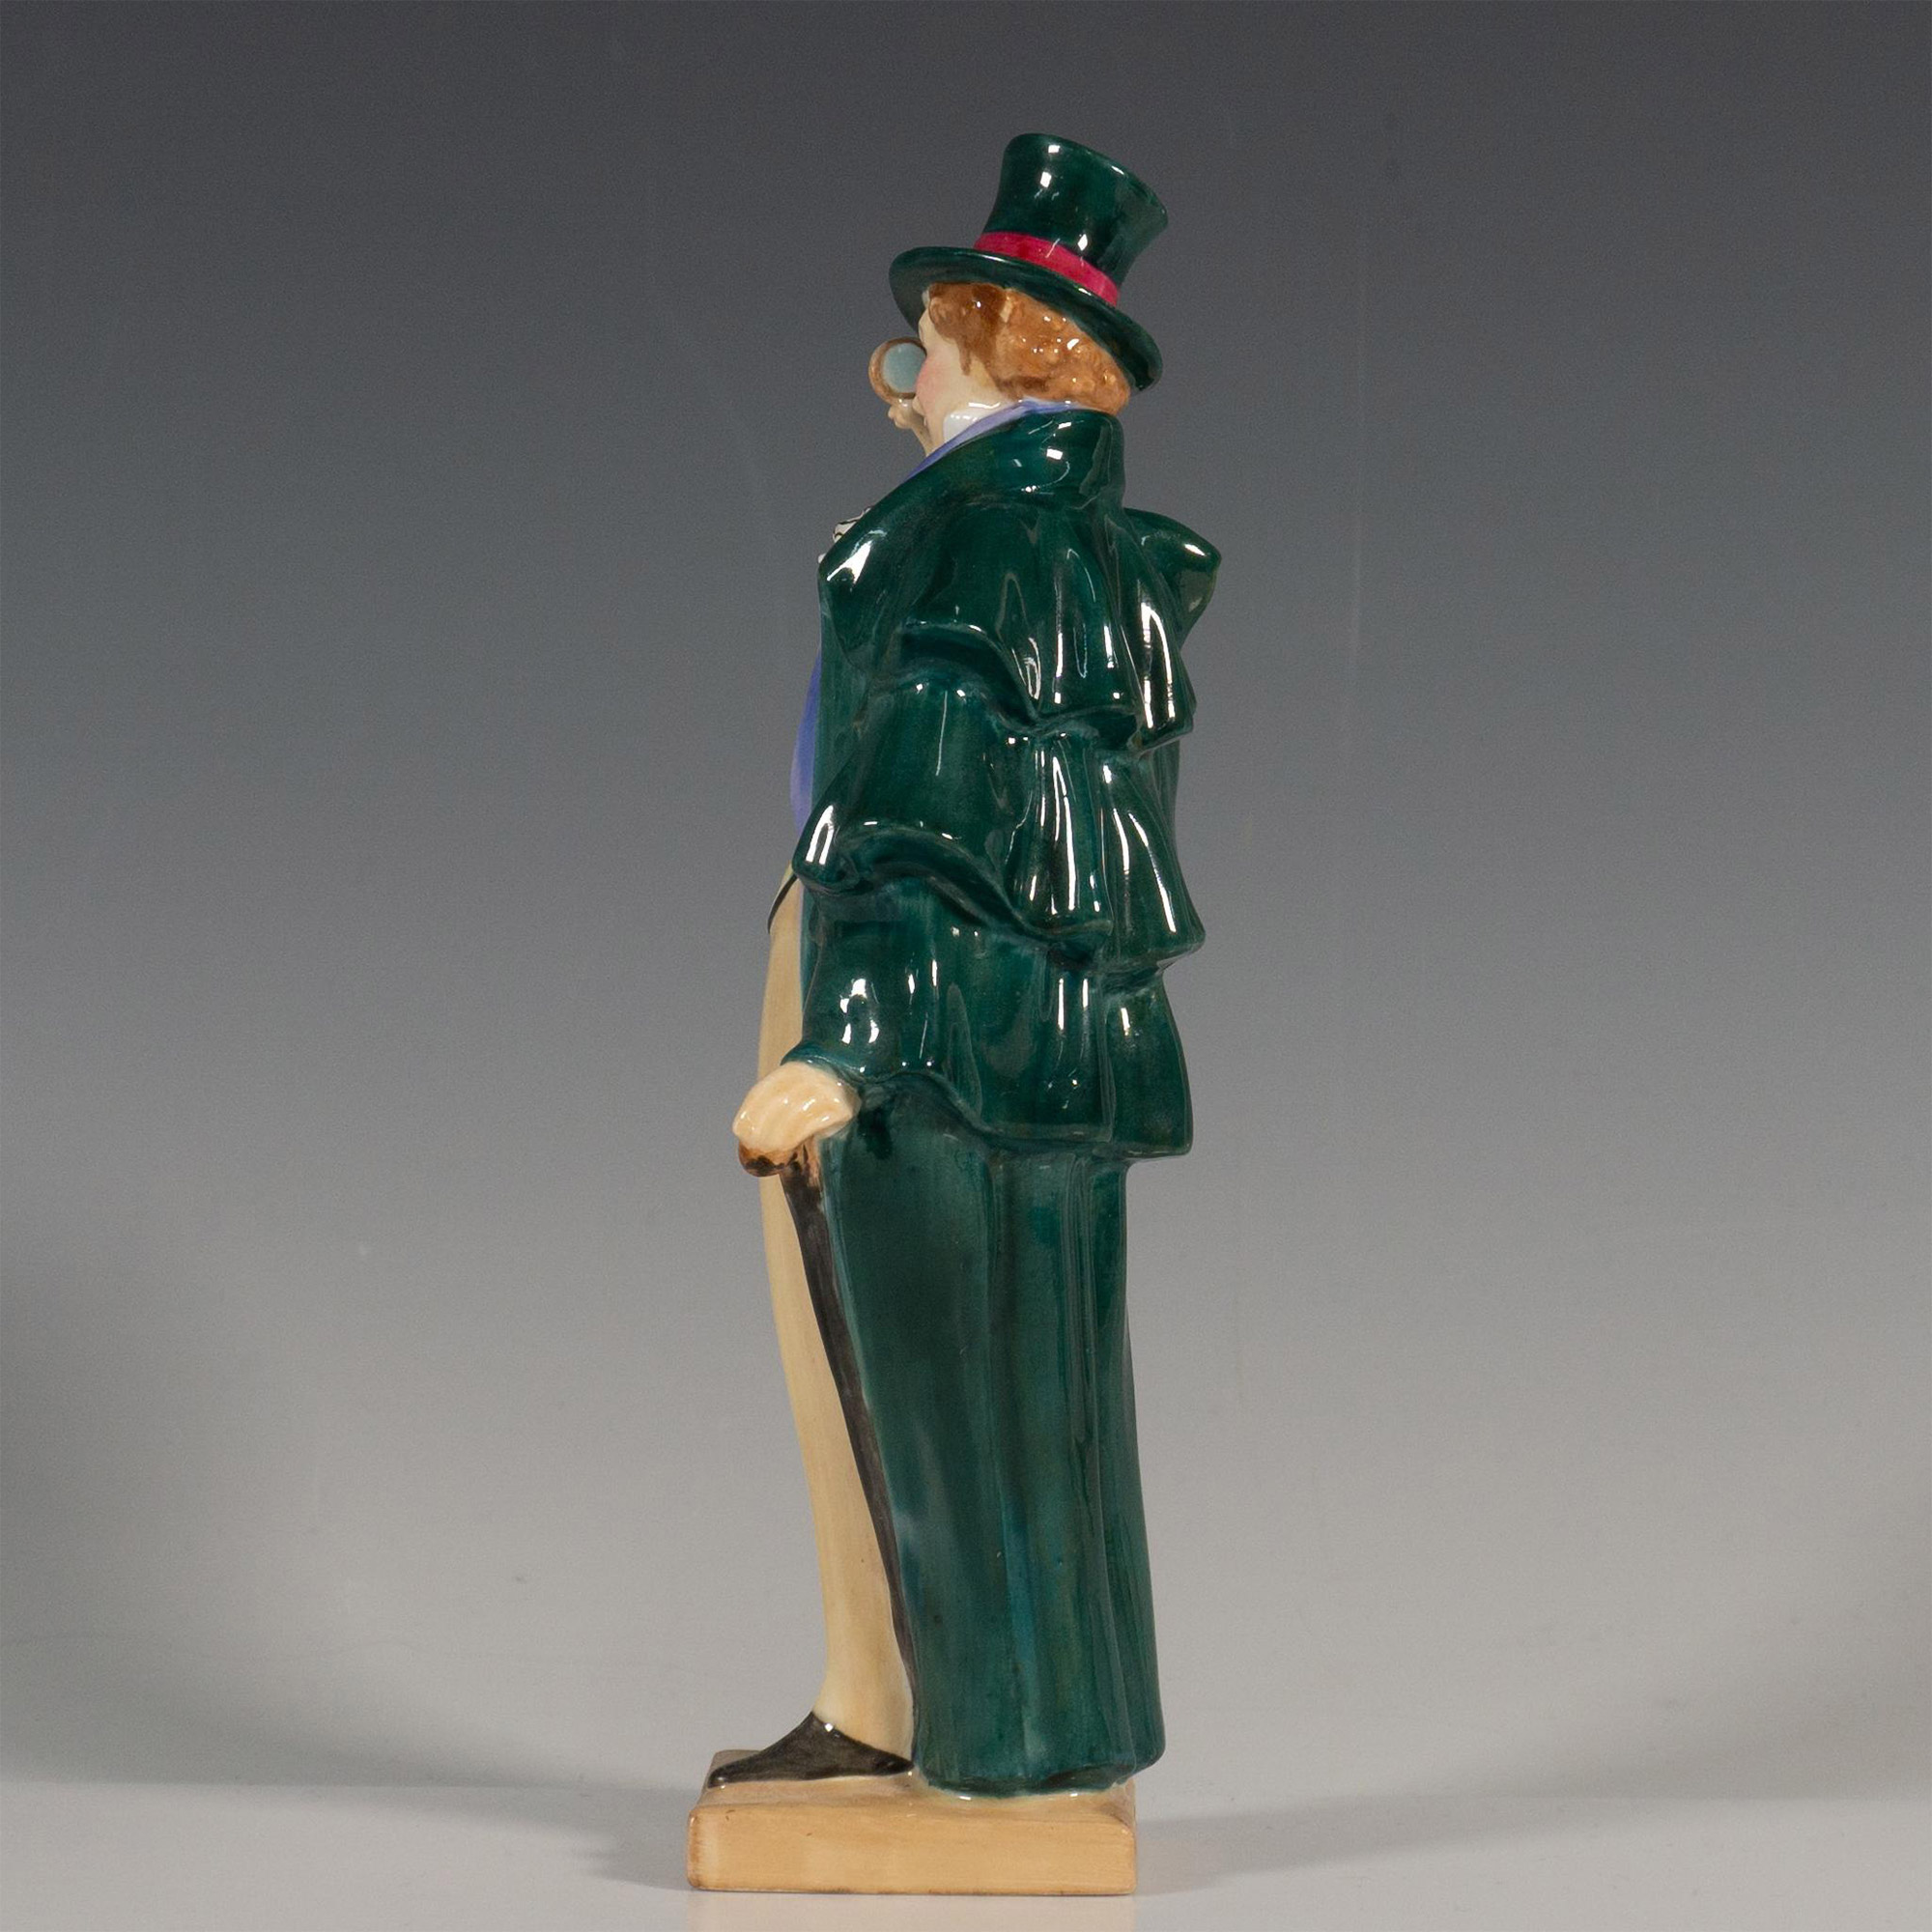 Corinthian - HN1973 - Royal Doulton Figurine - Image 2 of 4